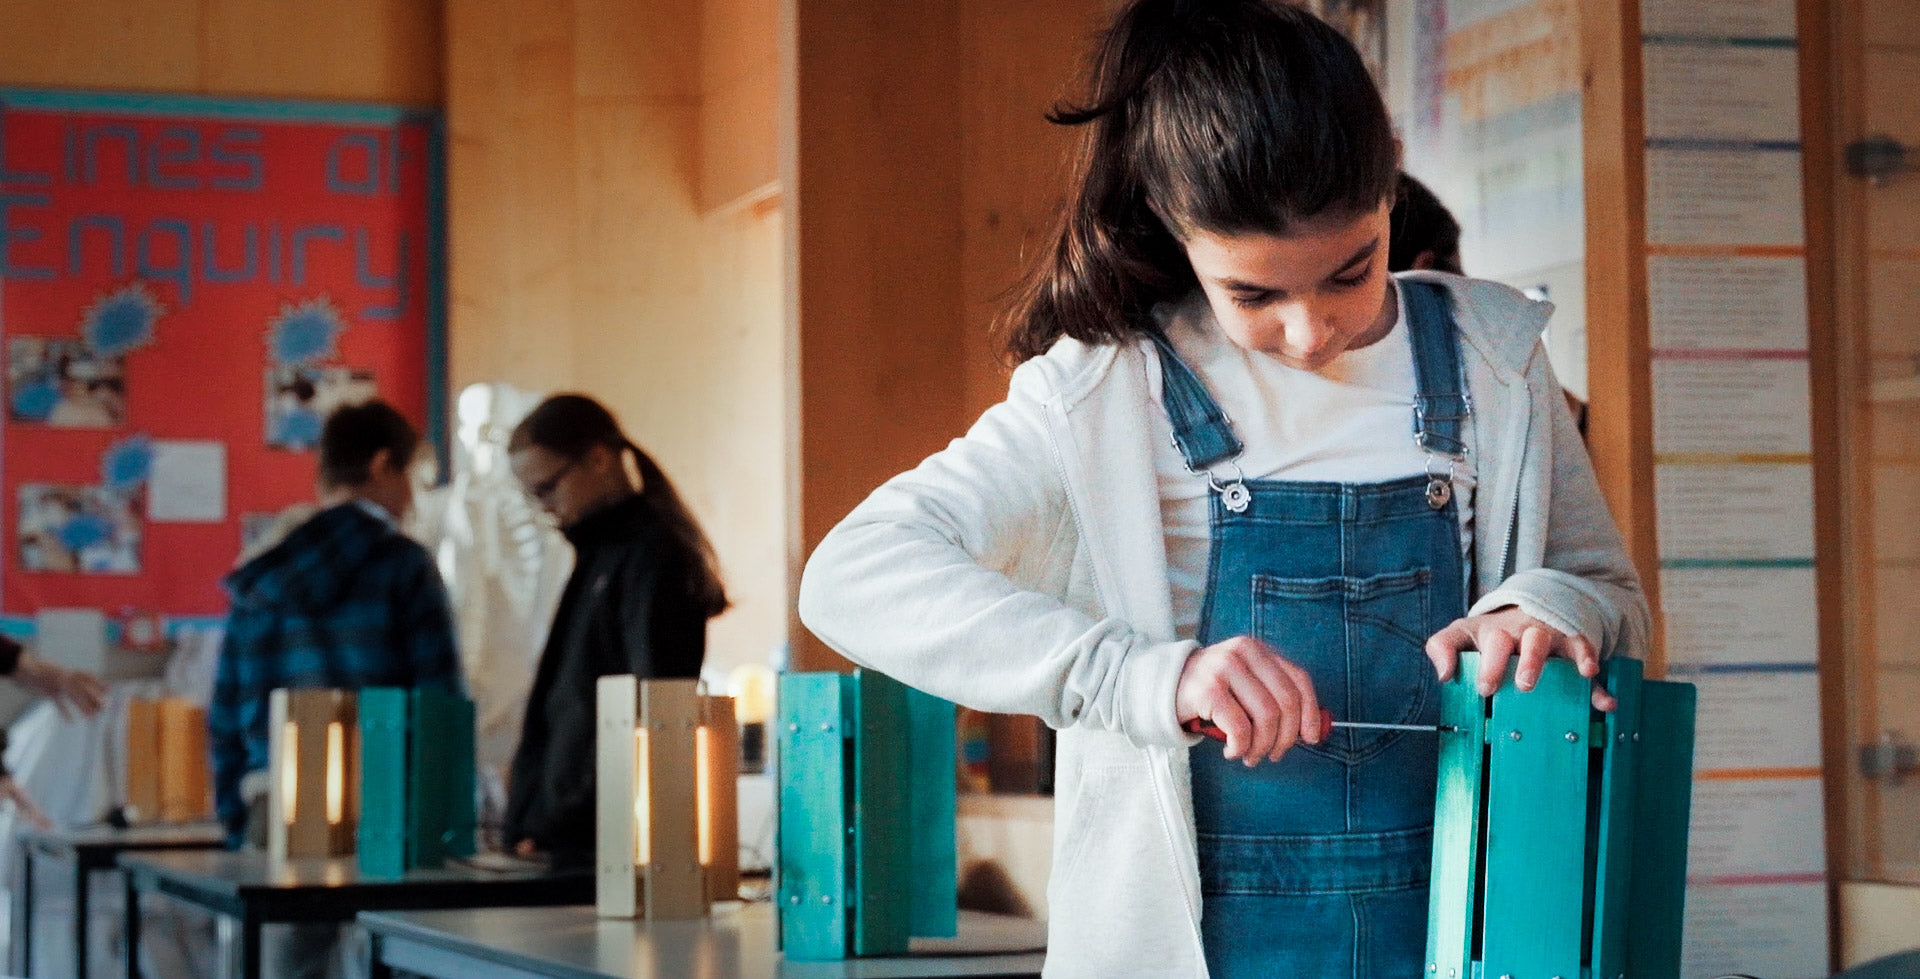 A Manufacto participant builds a wooden design object